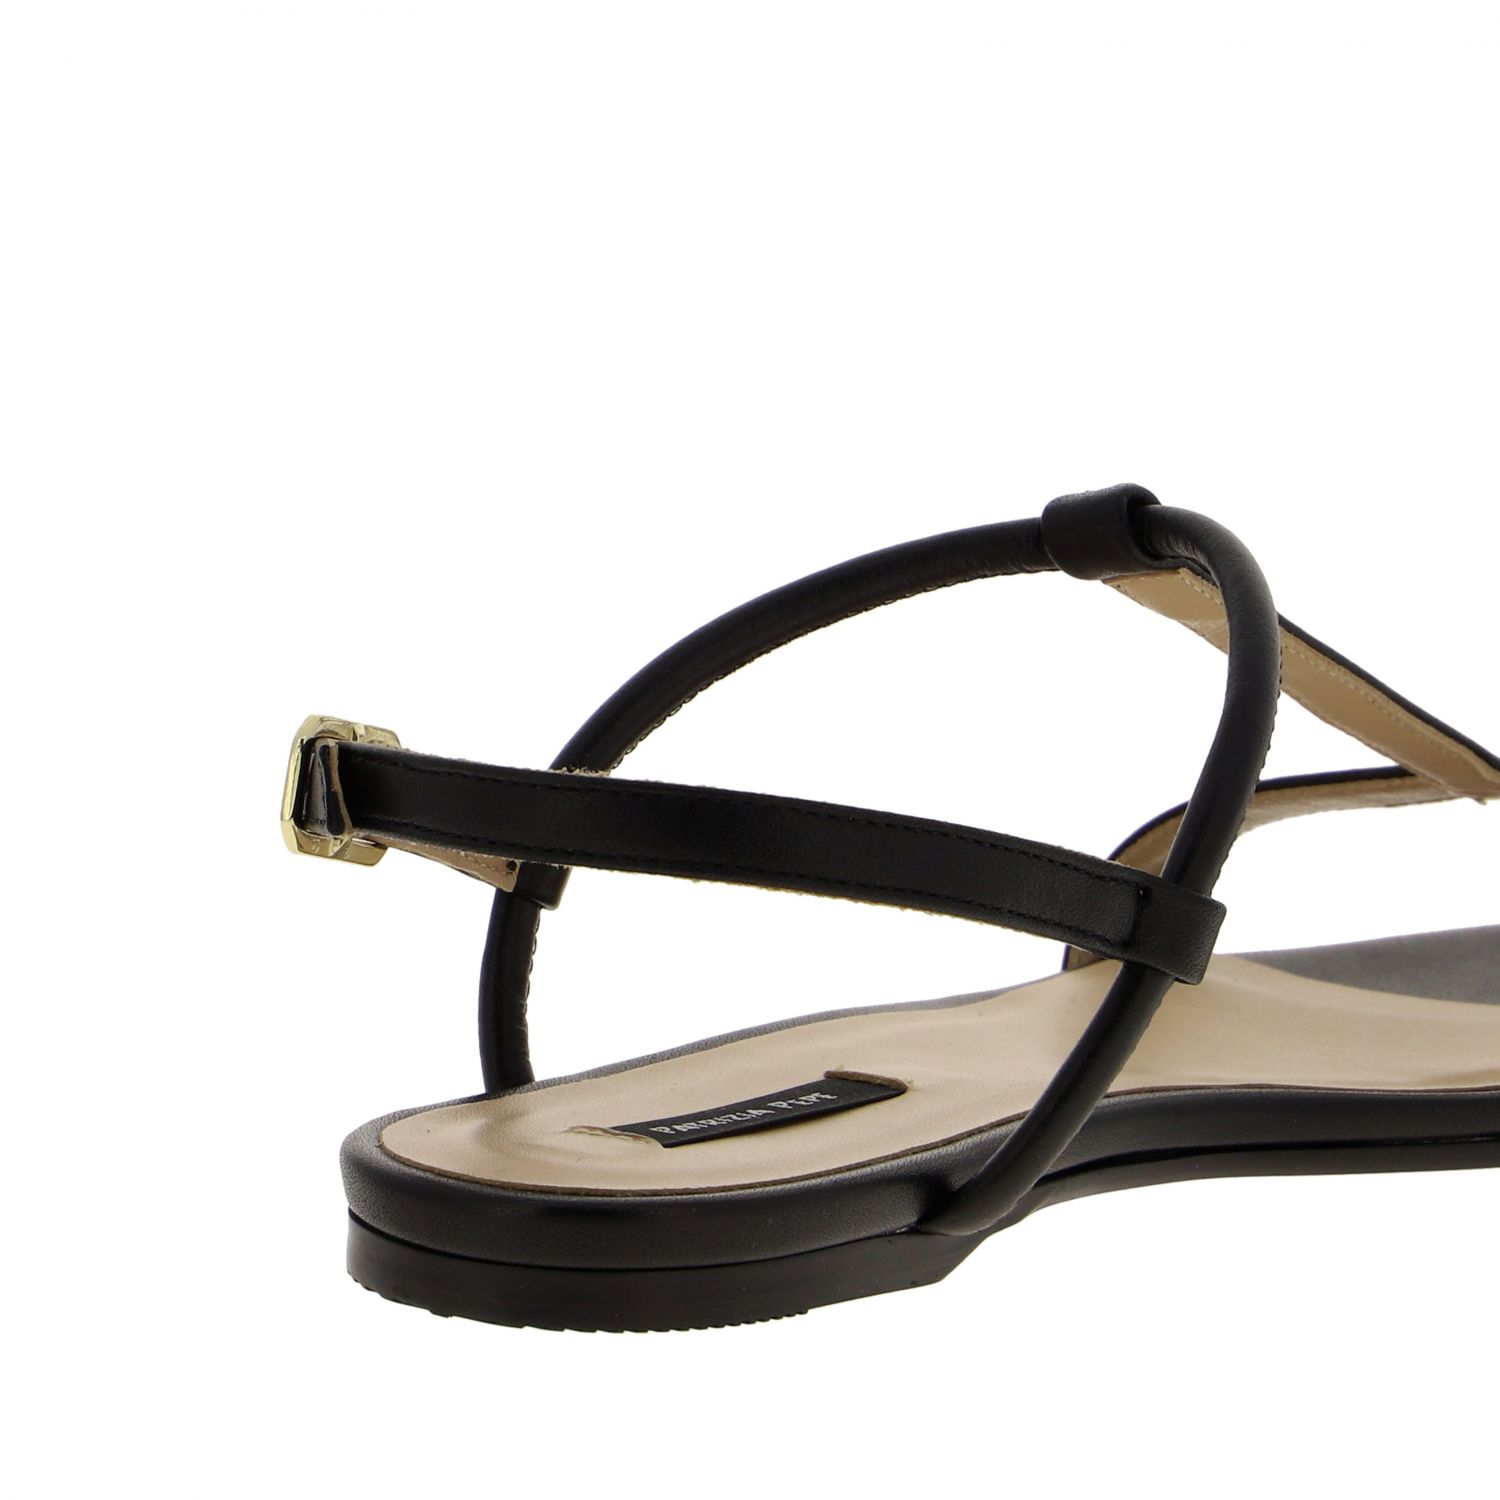 Patrizia Pepe Outlet: flat sandals for women - Black | Patrizia Pepe ...